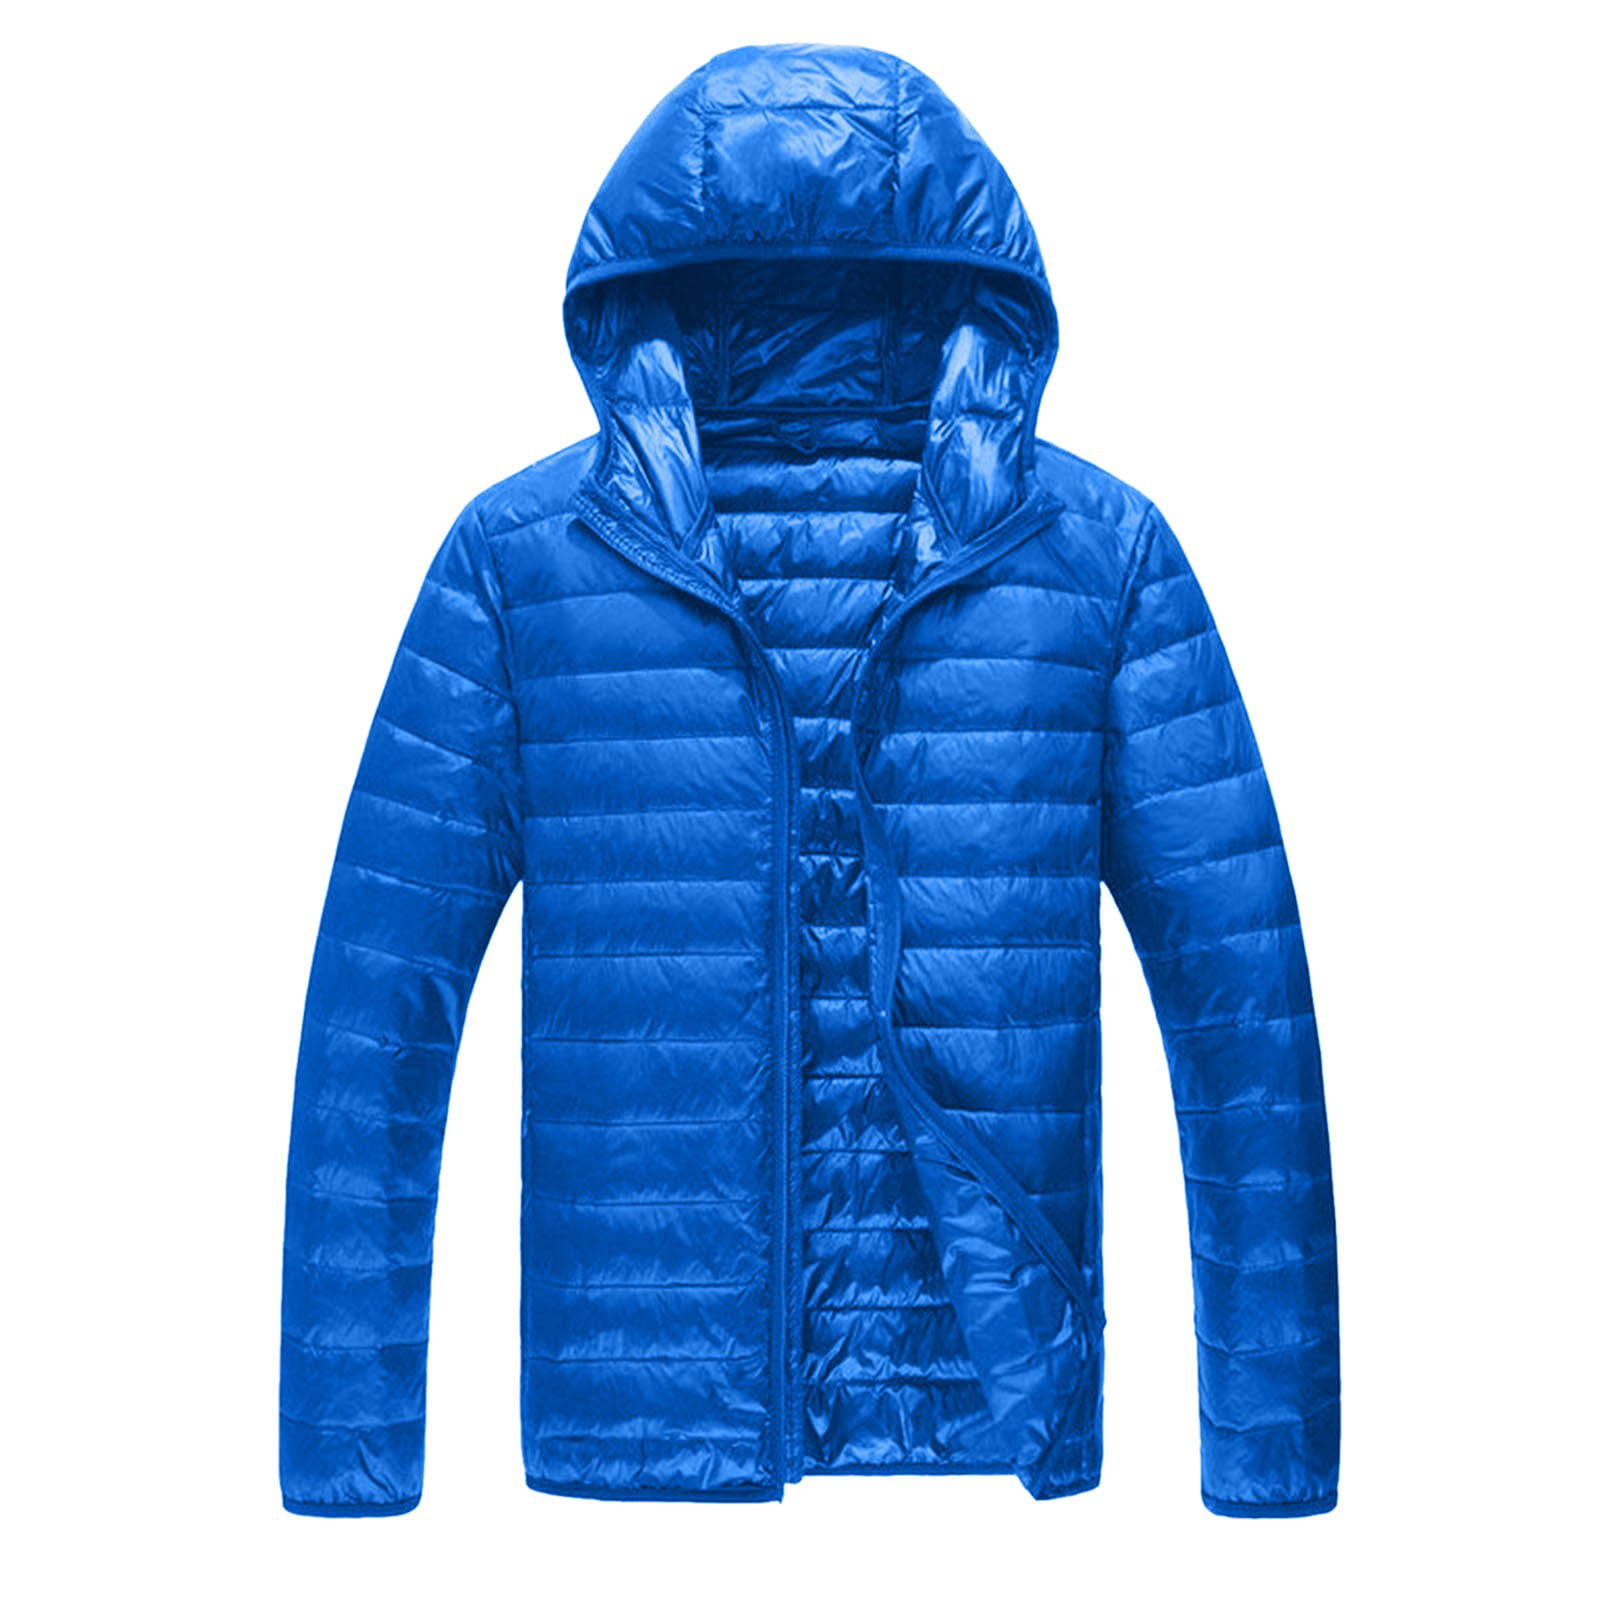 Vestitiy Men's Winter Coat Puffer Ski Jacket Hotselling Winter Ultra ...